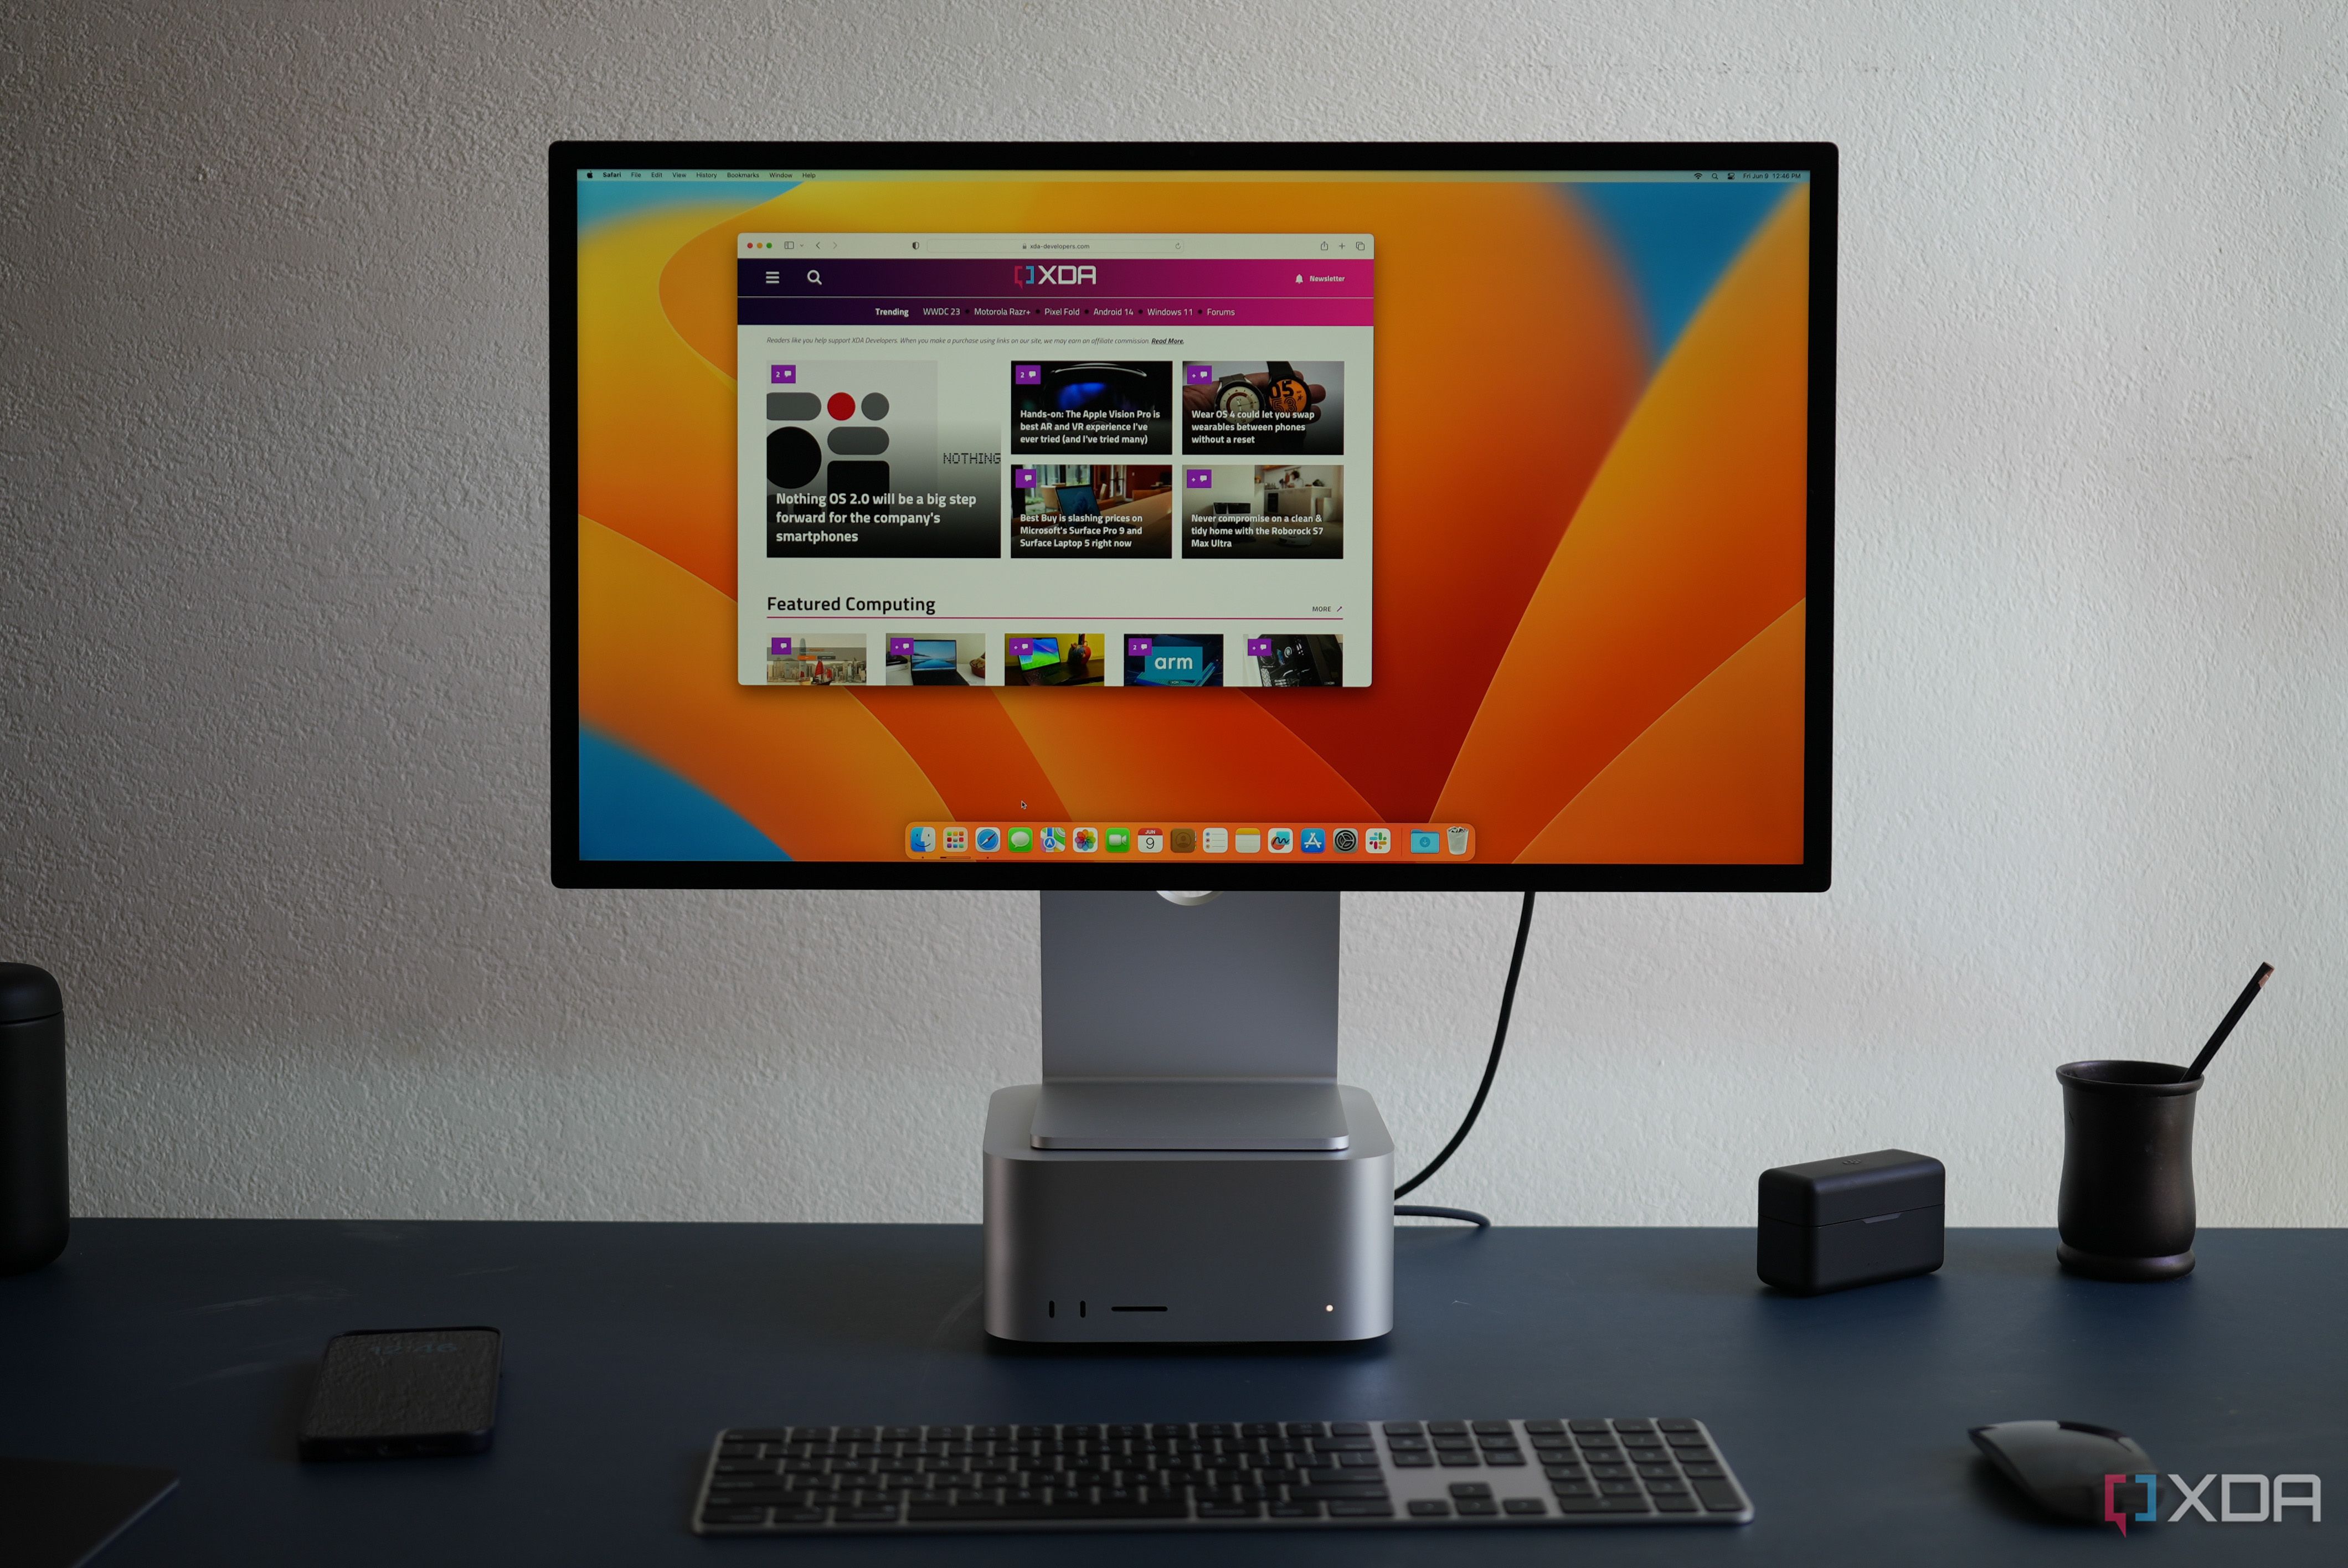 M2 Ultra Mac Studio review: Top of the line – Six Colors